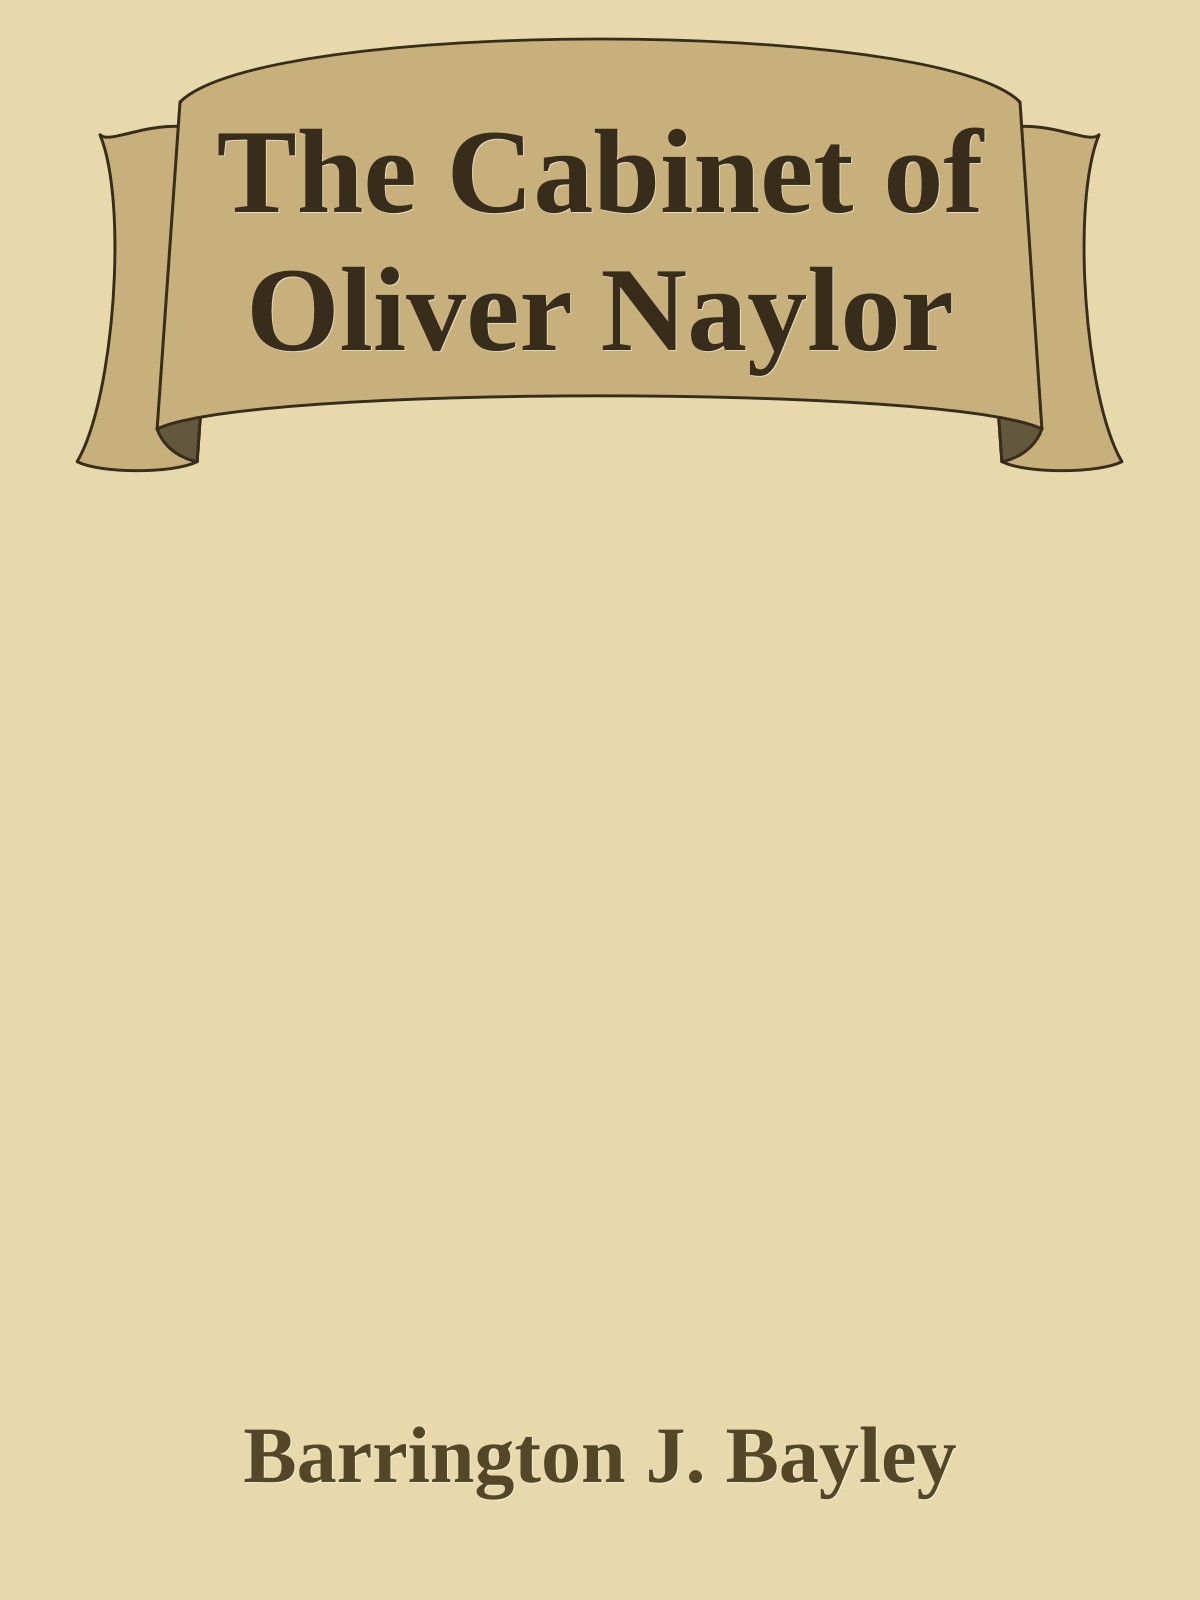 The Cabinet of Oliver Naylor